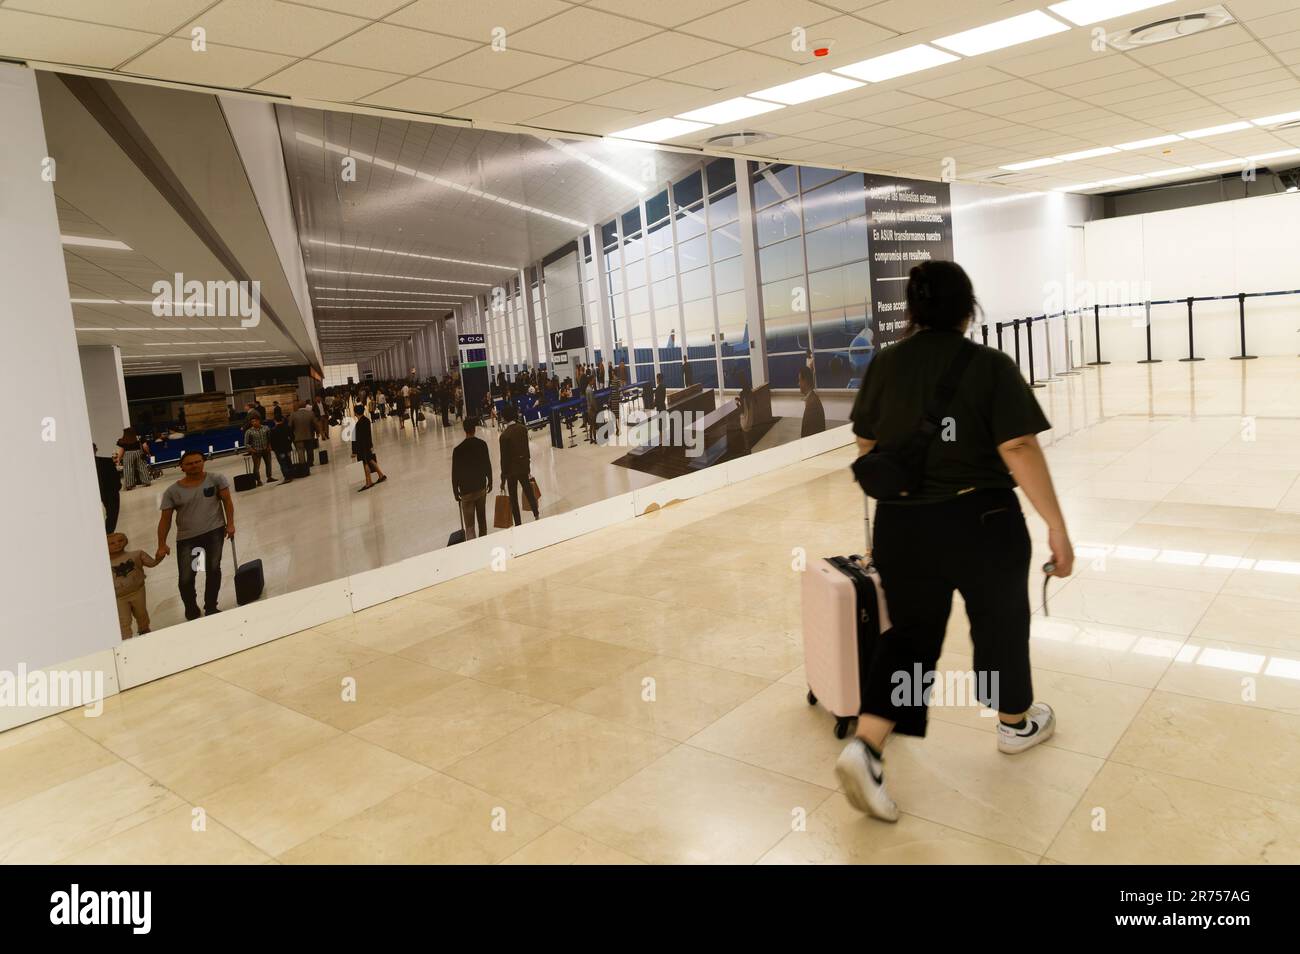 Passengers walking alomg corridor inside Merida airport, Mexico Stock Photo